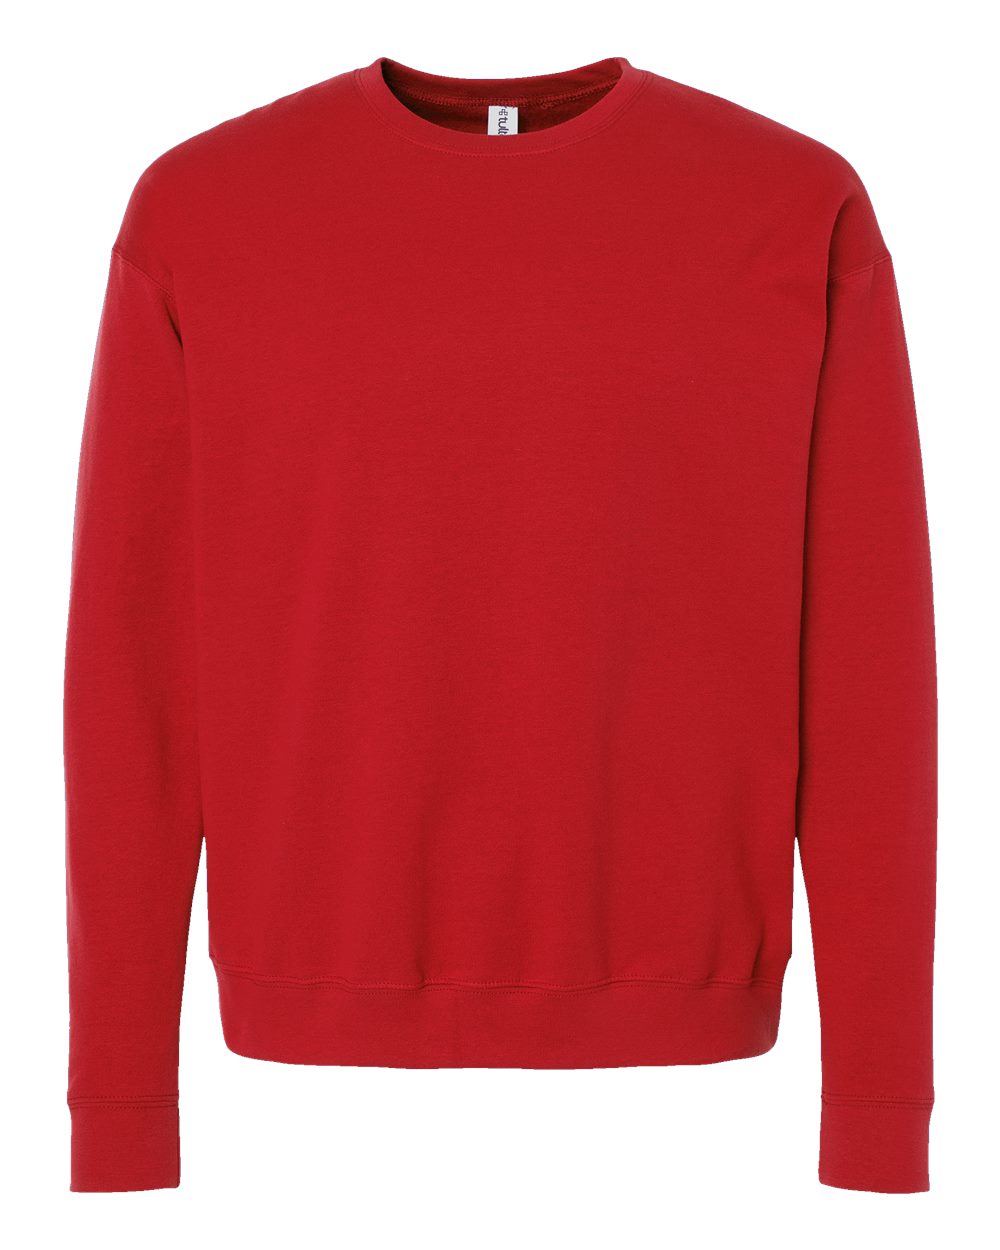 Tultex 340 Fleece Adult Sweatshirt - Red